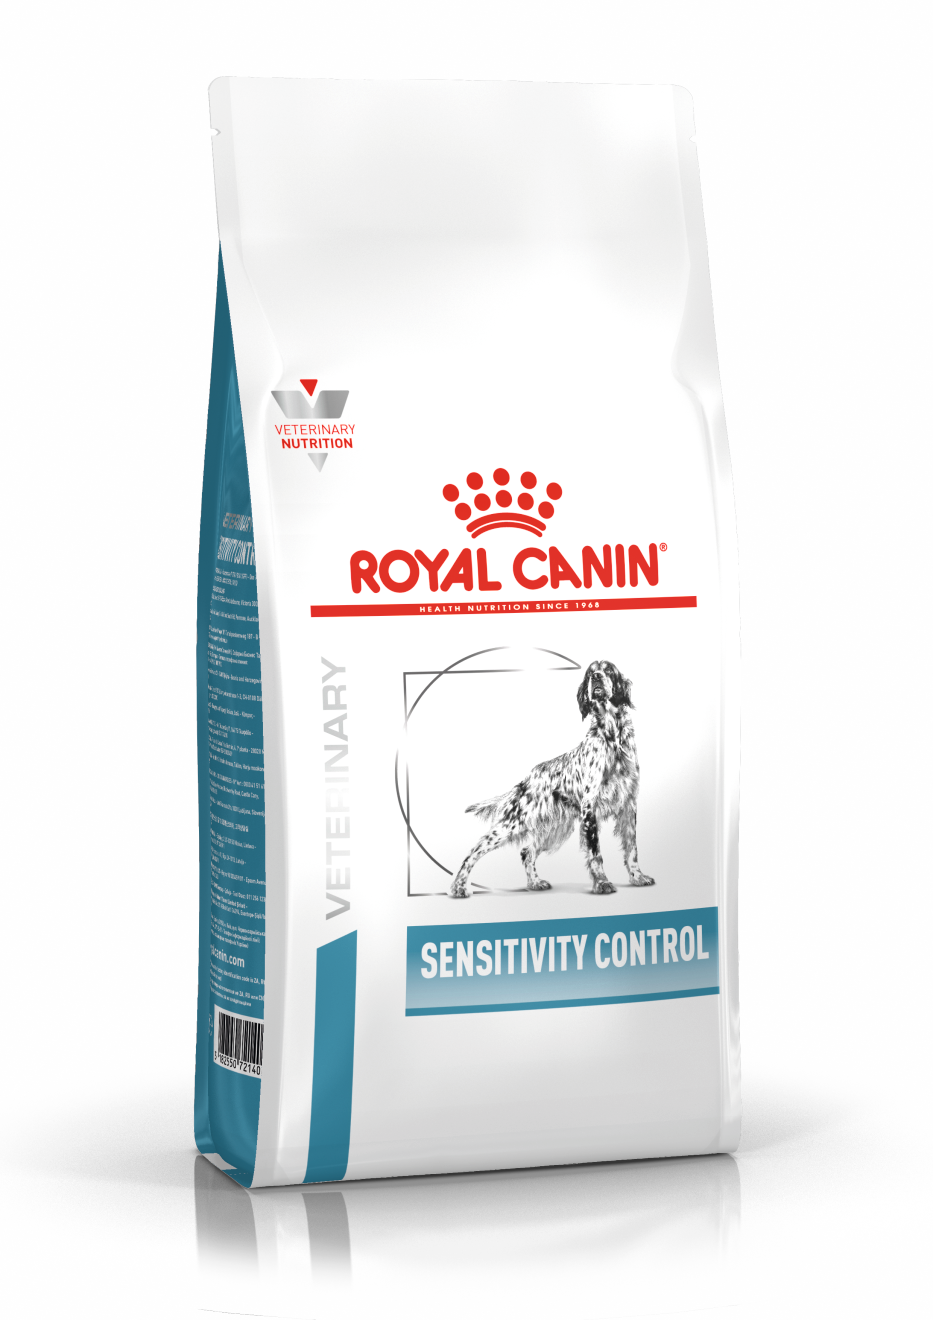 Royal Canin - Sensitivity Control Dog